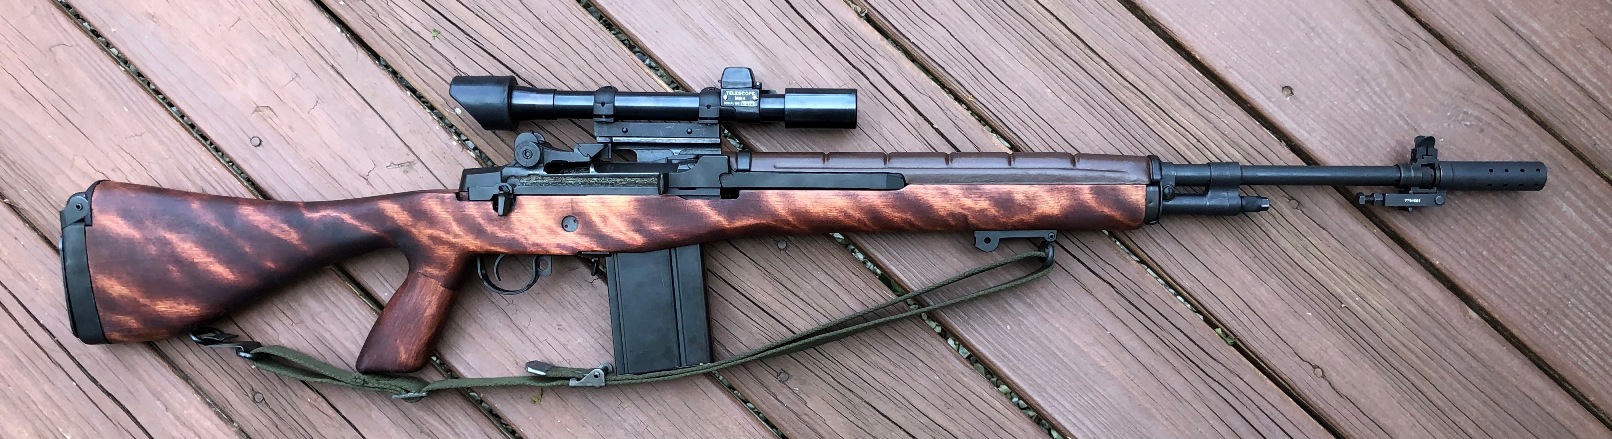 M14A1_Improvised_sniper_rt1_v2.jpg